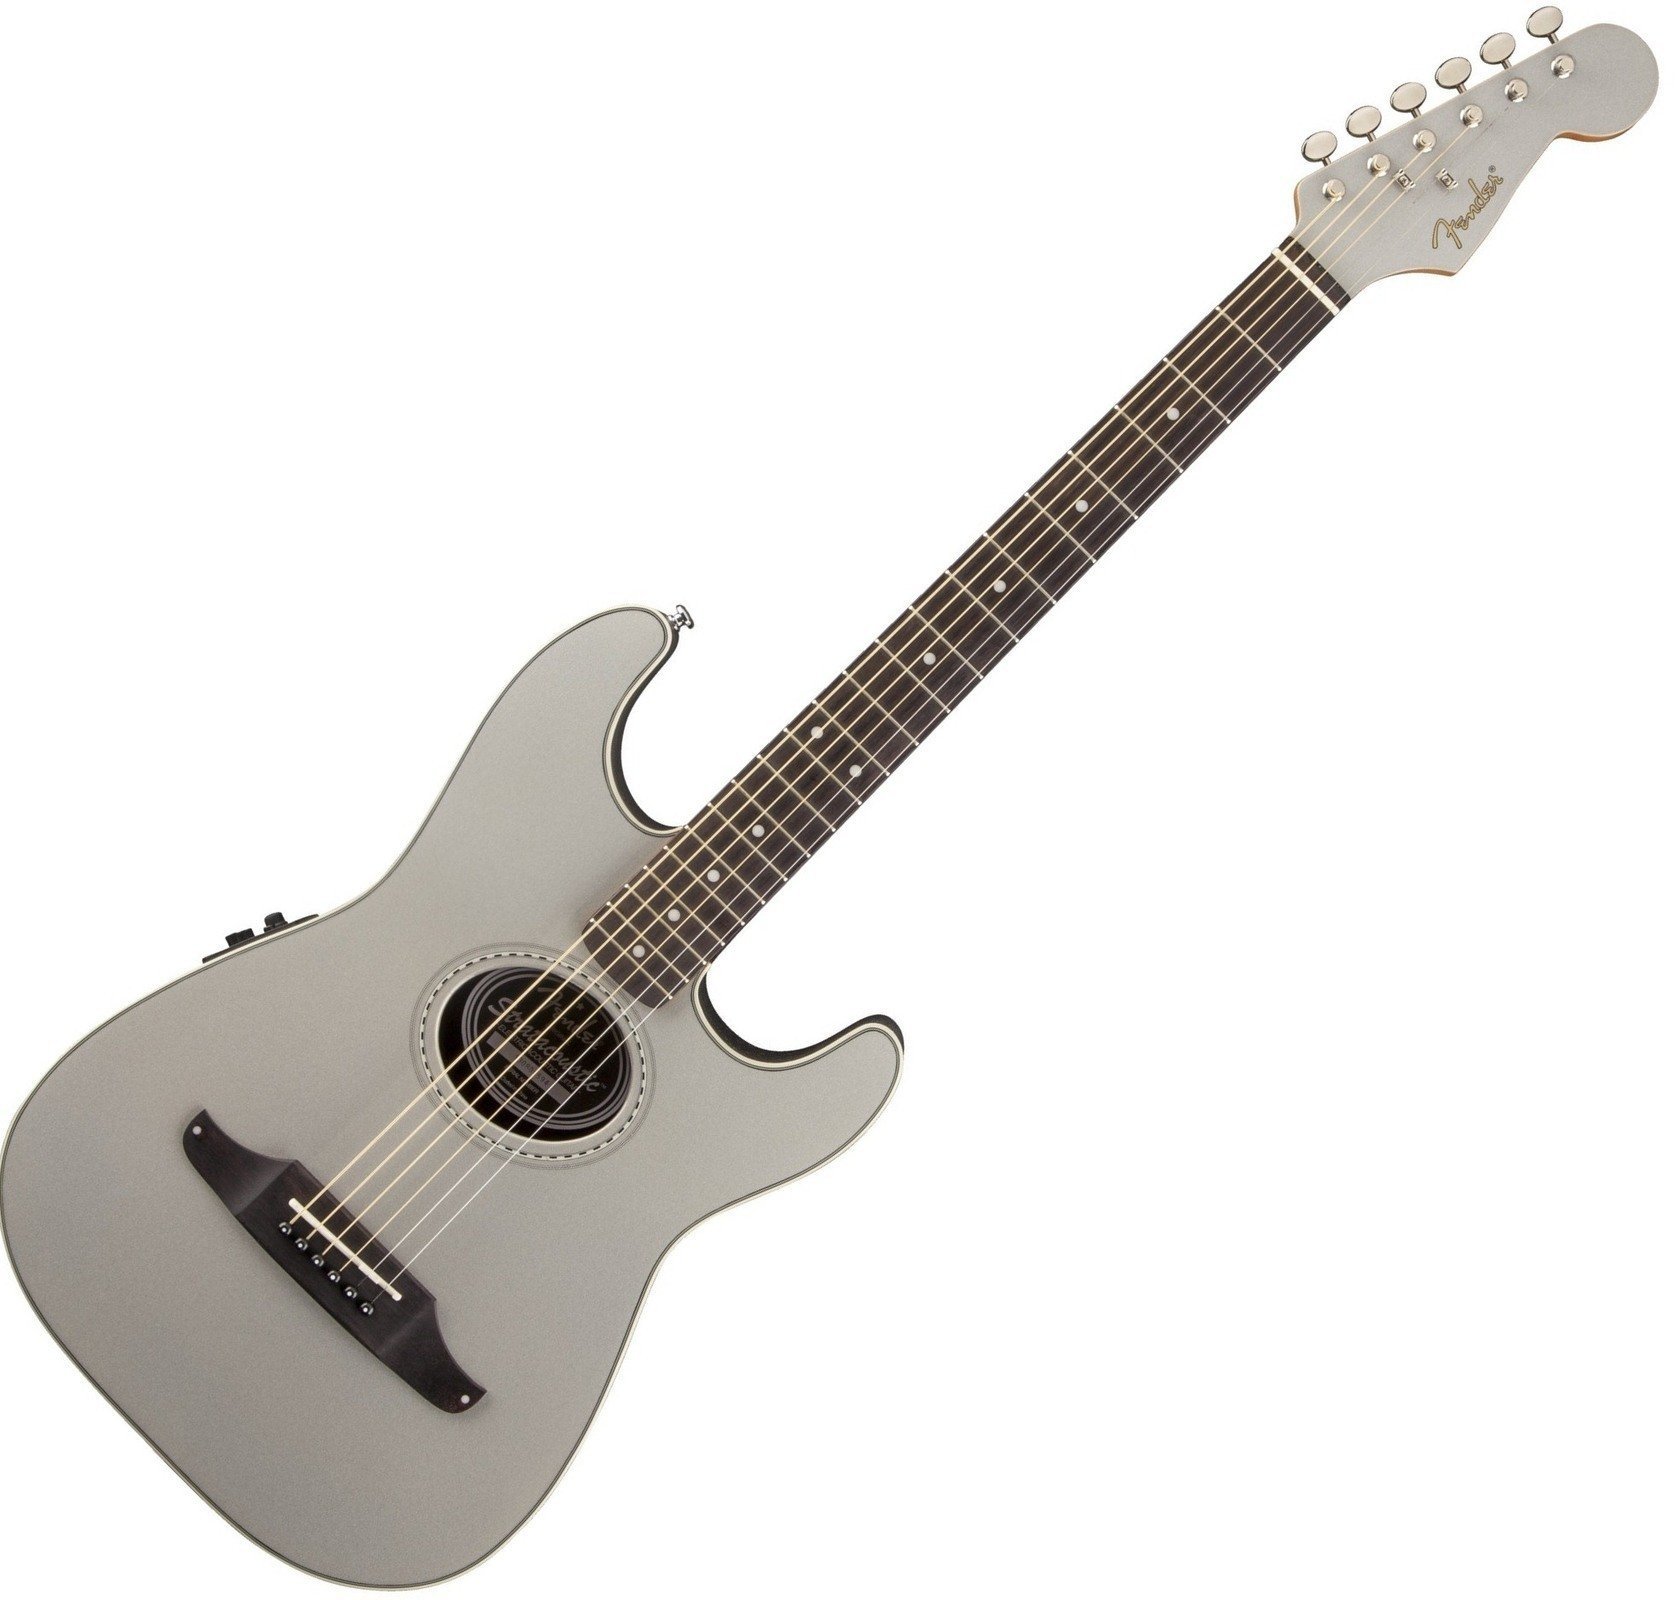 Speciell akustisk-elektrisk gitarr Fender Stratacoustic Plus Inca Silver